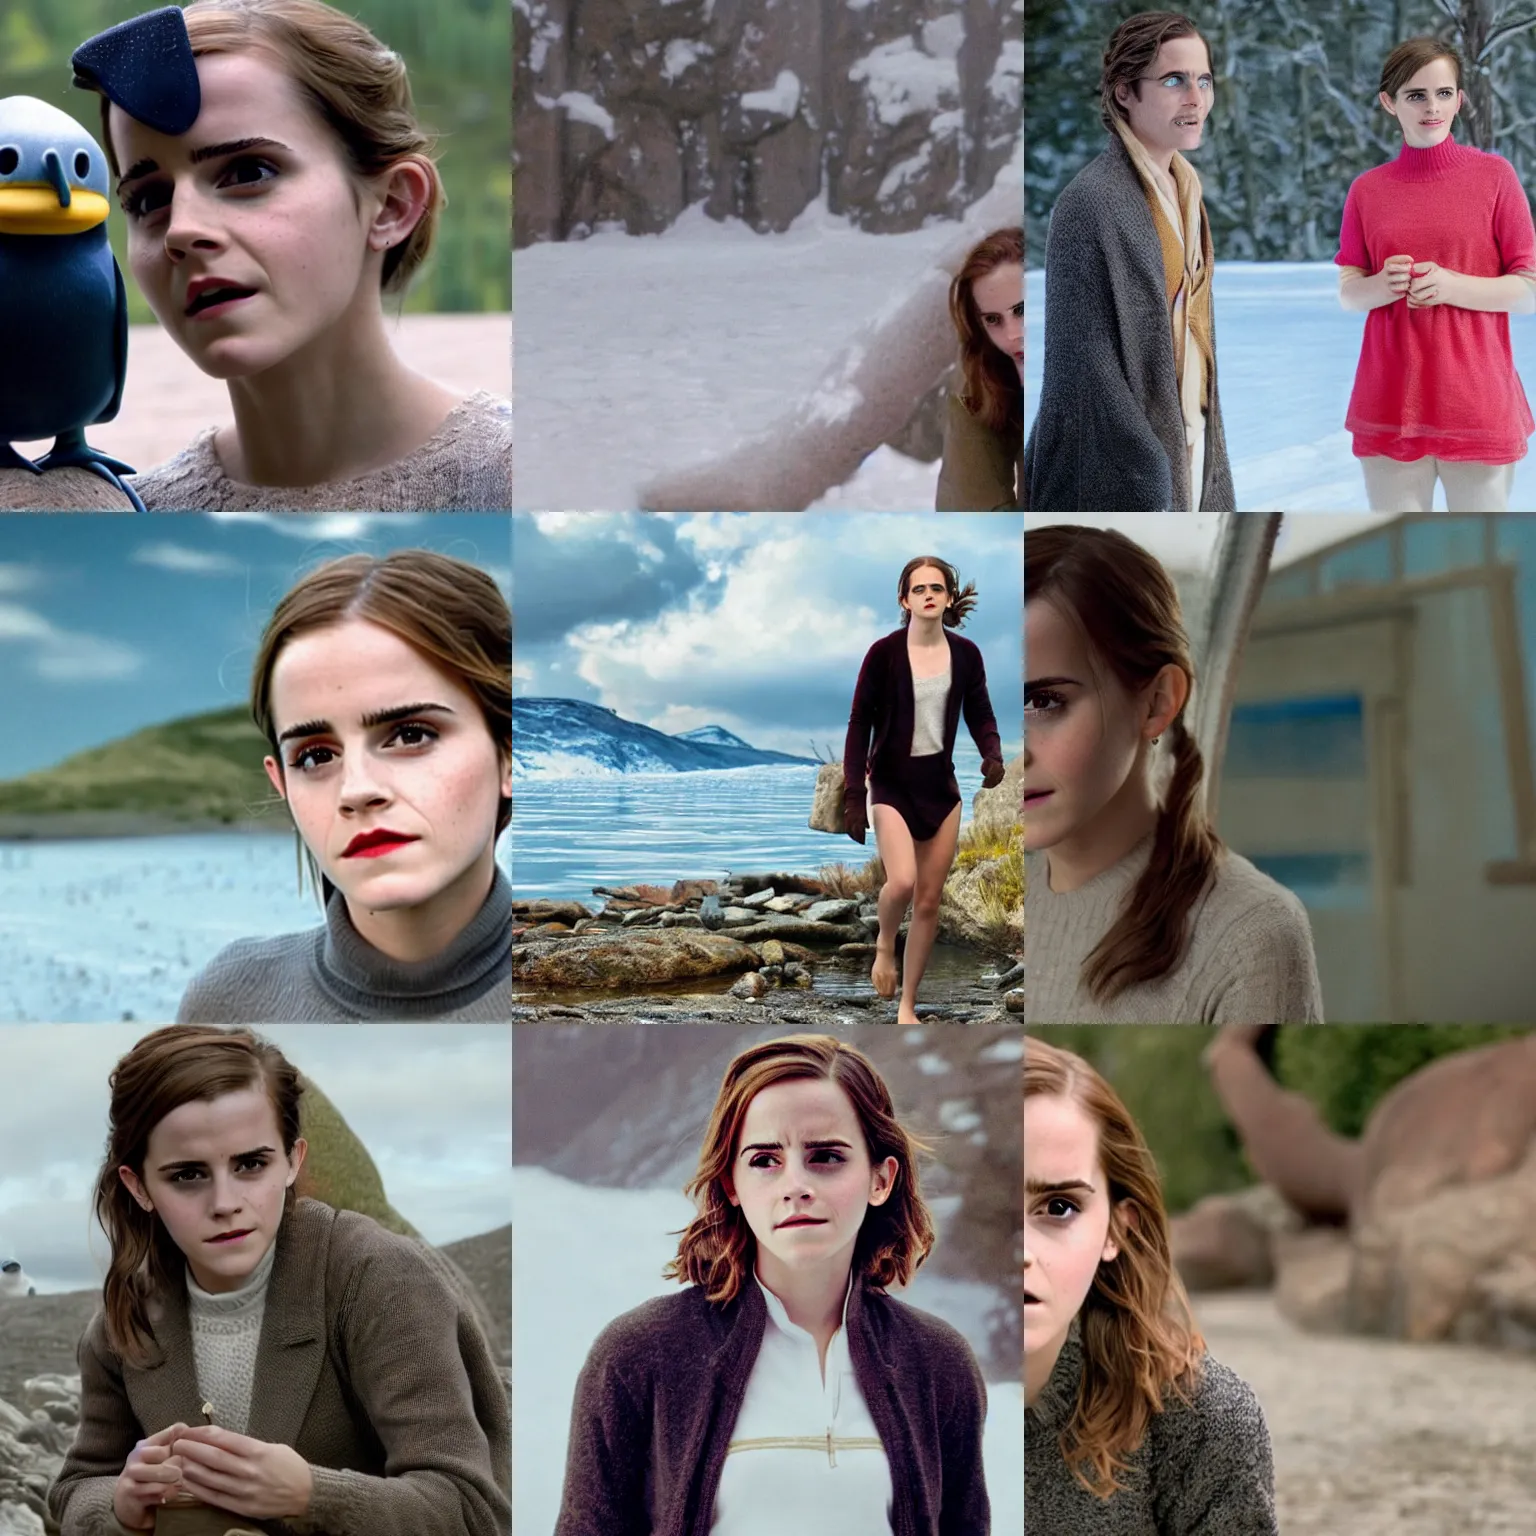 Prompt: Movie still of Emma Watson in Pingu